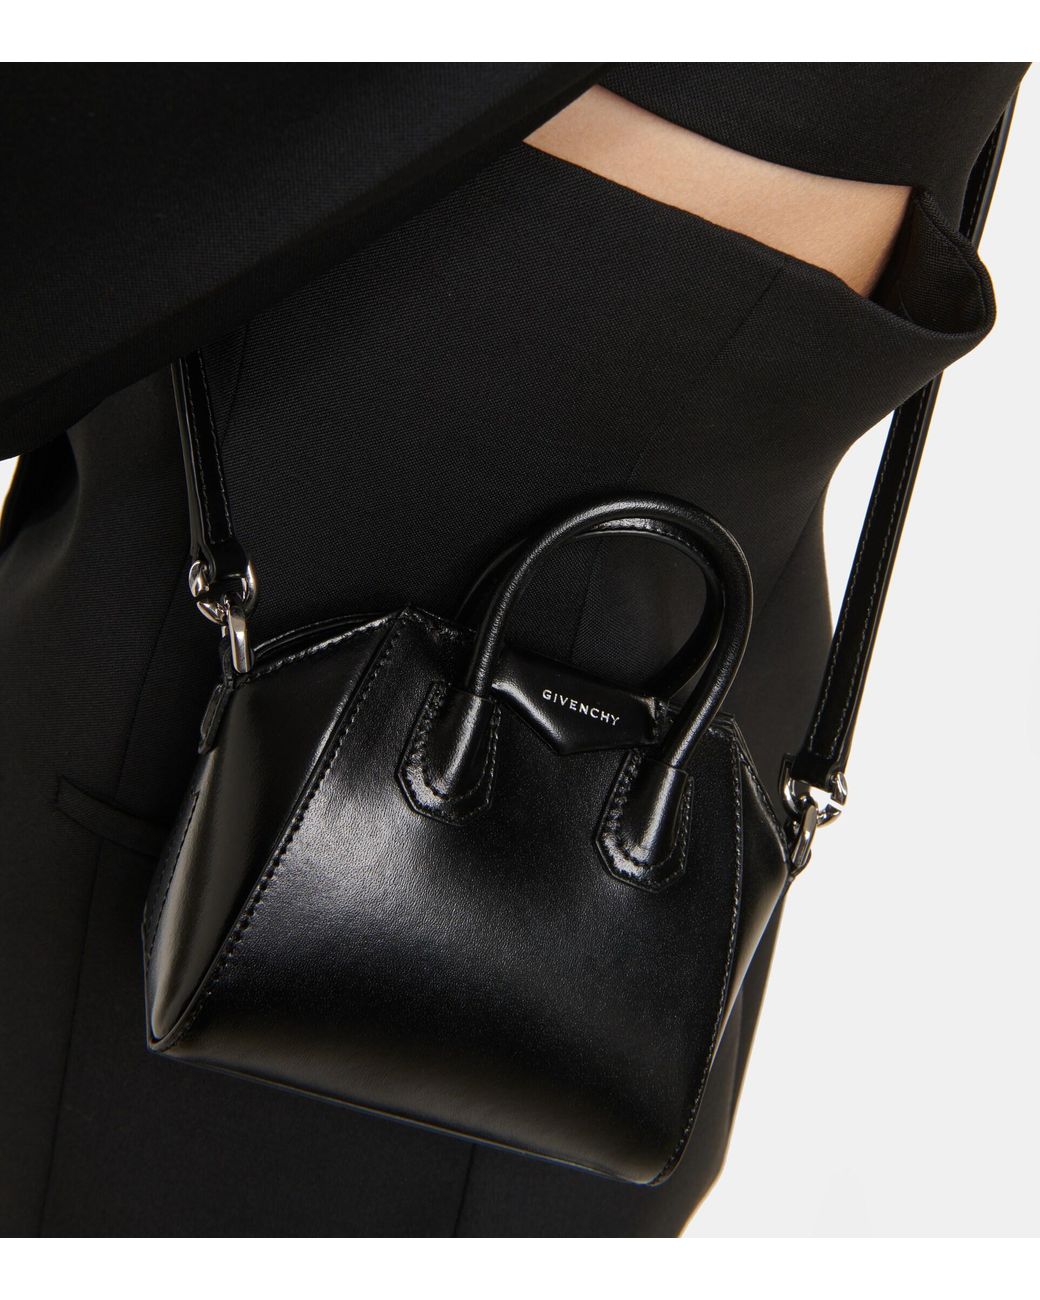 Givenchy Antigona Micro Leather Tote Bag in Black | Lyst